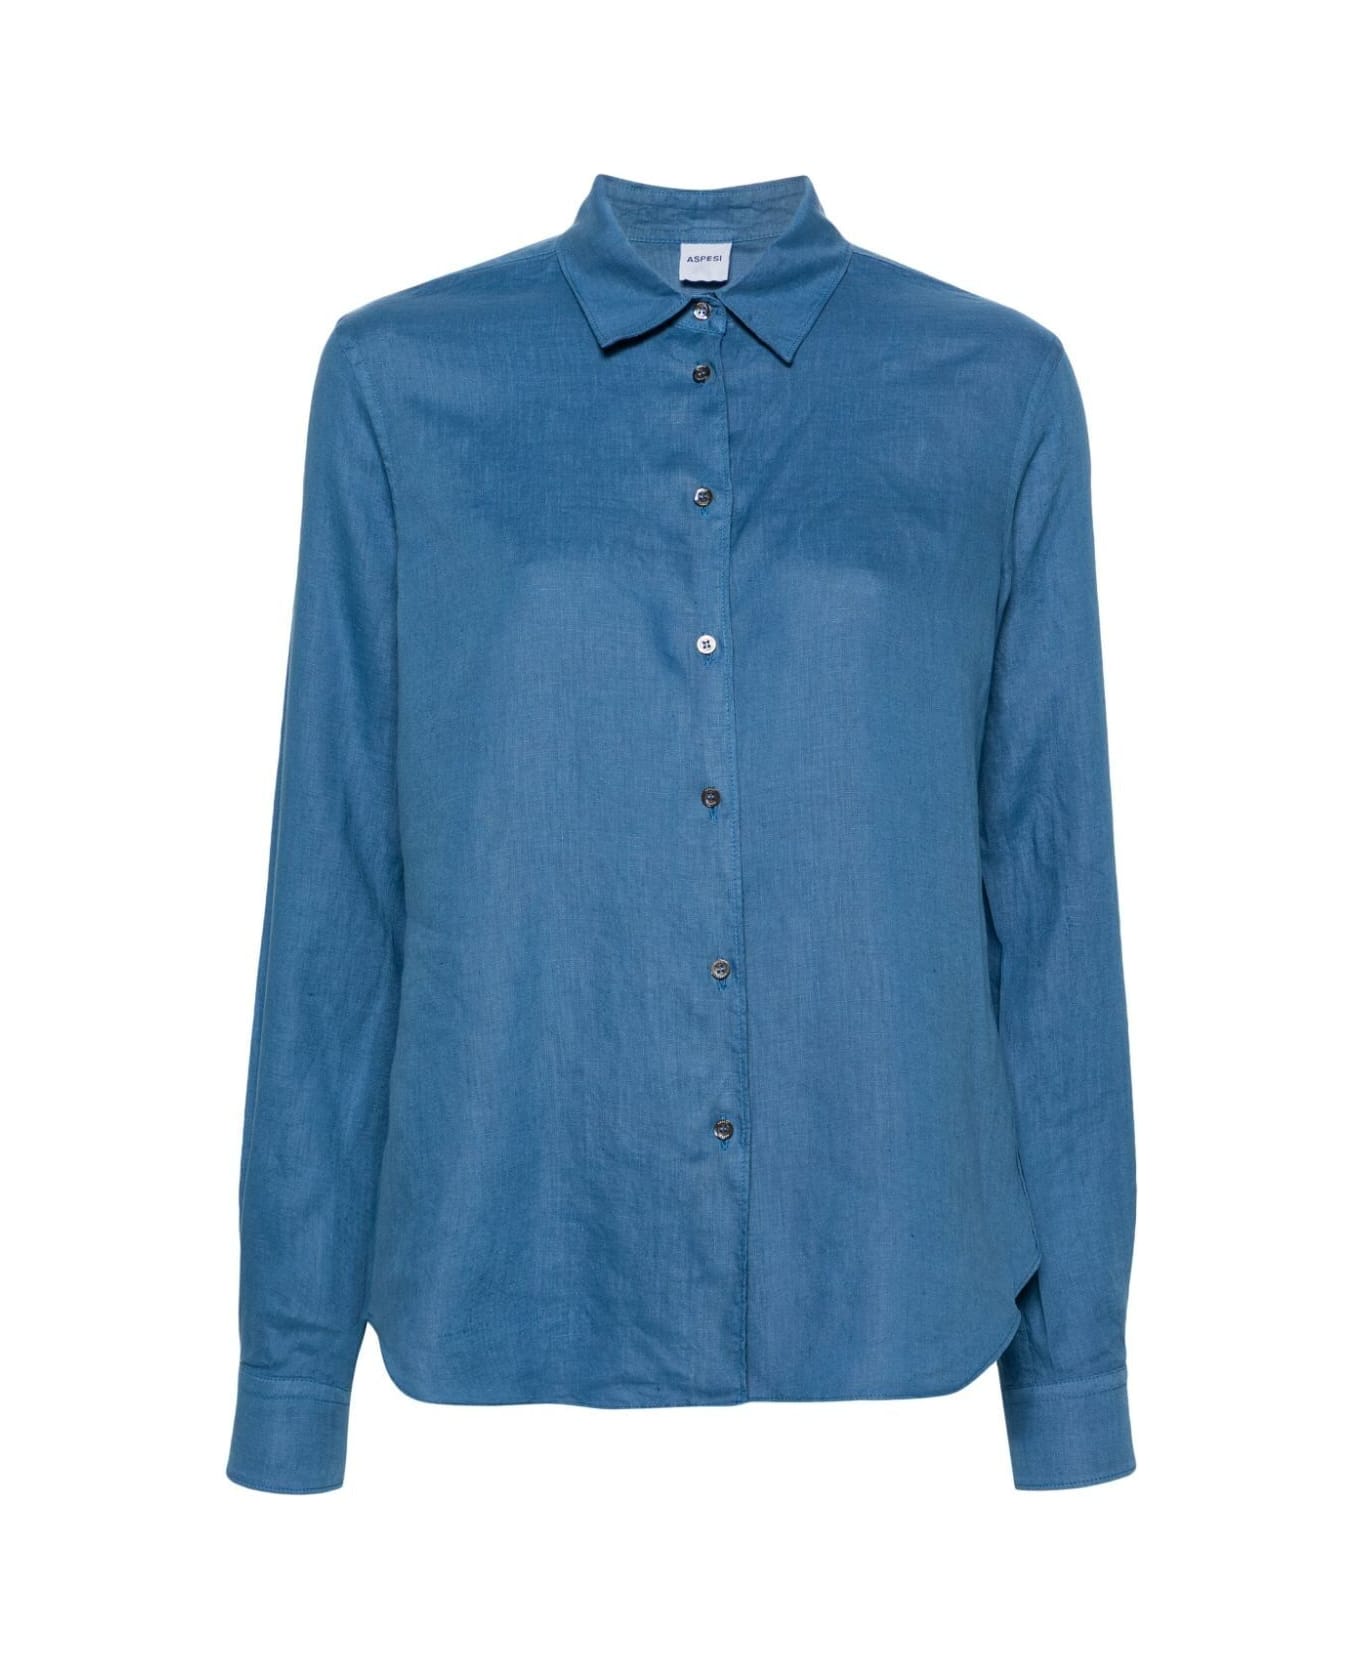 Aspesi Mod 5422 Shirt - Blue